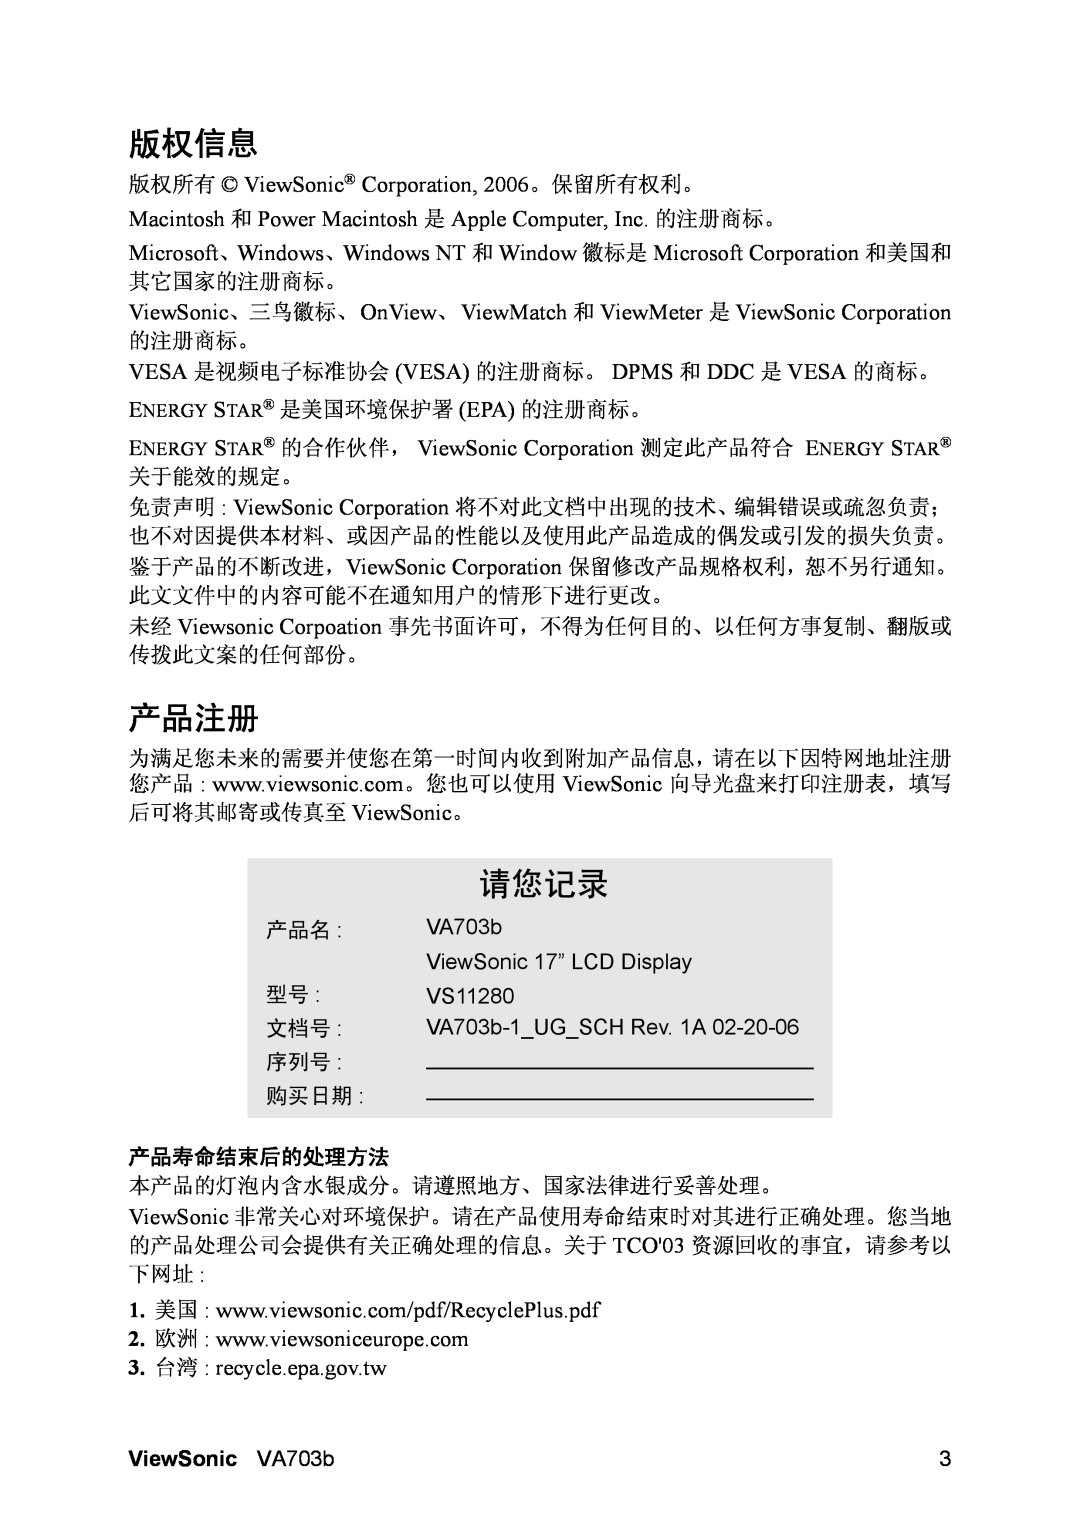 ViewSonic VS11280 manual 版权信息, 产品注册, 请您记录, 3.台湾 recycle.epa.gov.tw, 产品寿命结束后的处理方法, ViewSonic VA703b 